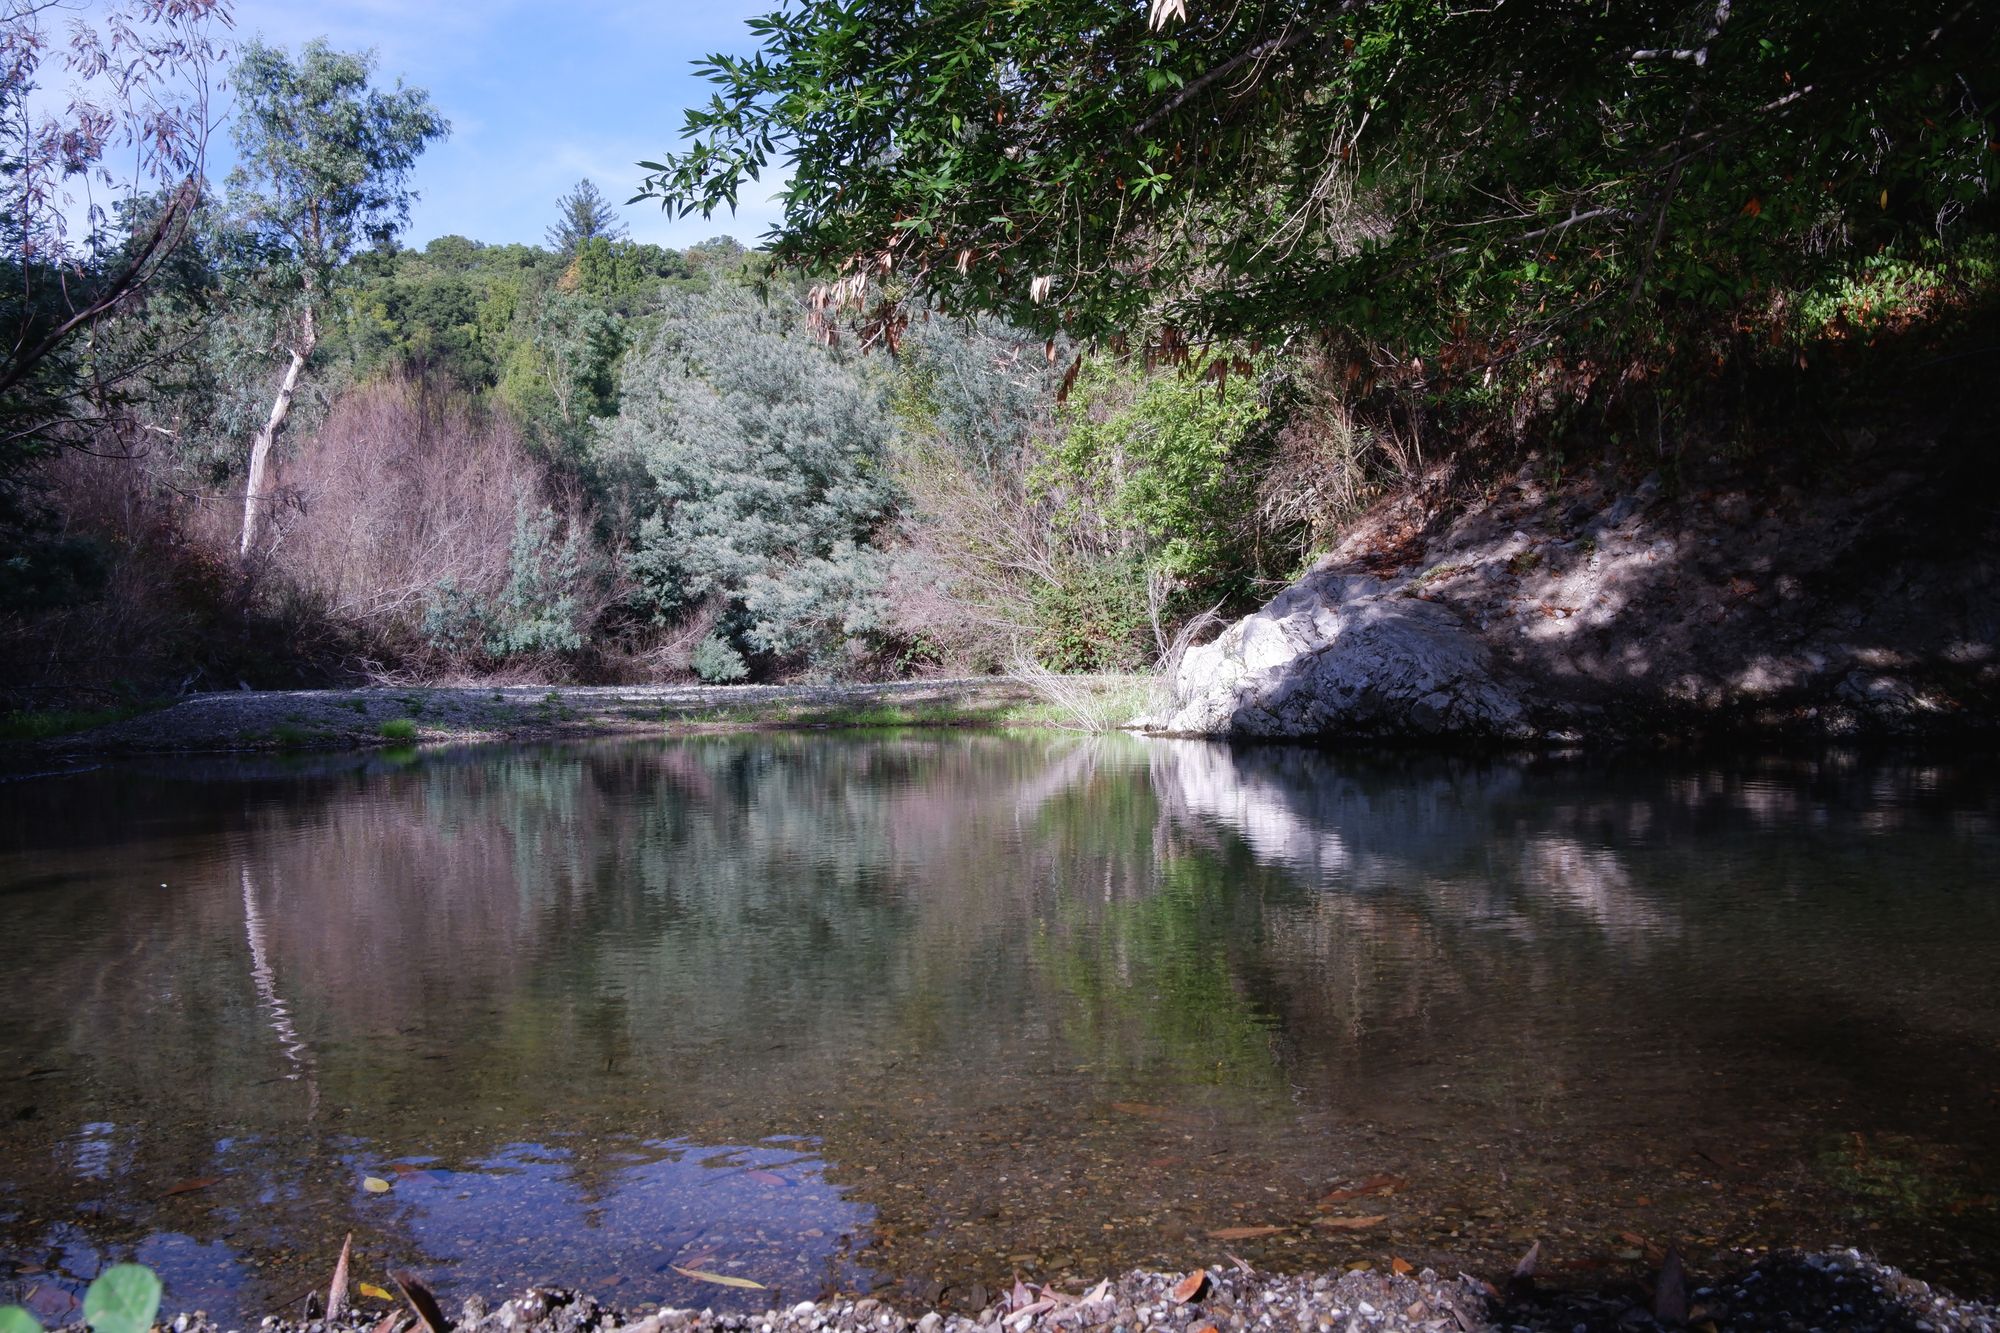 A deeper pool of water at Los Gatos Creek